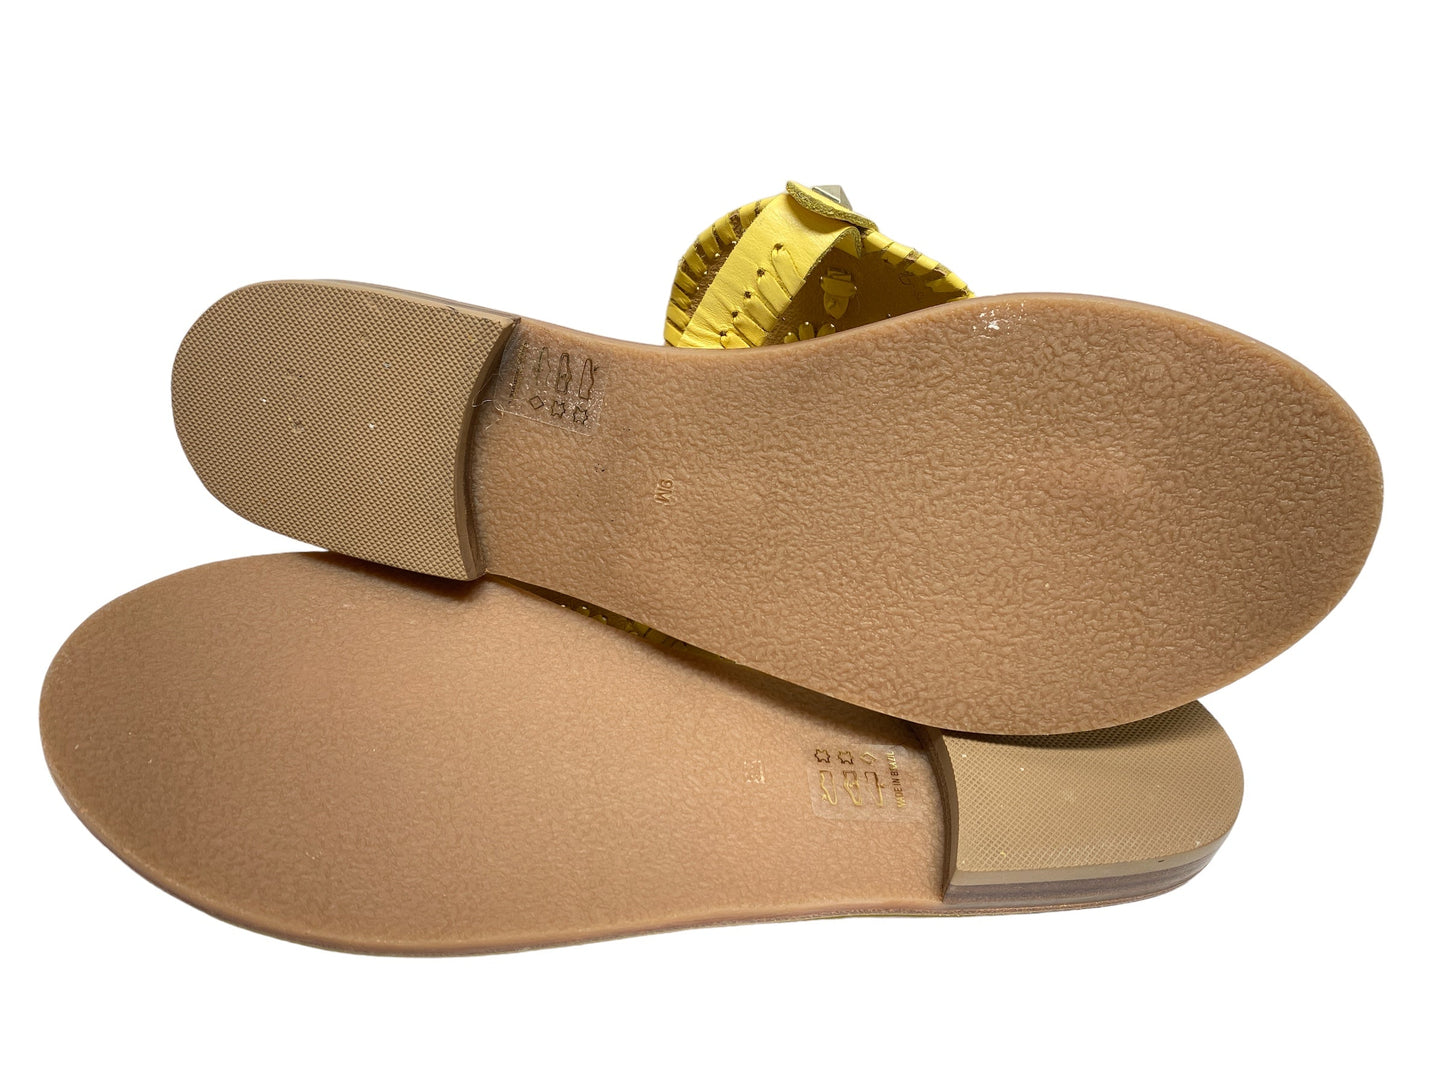 Yellow Sandals Flip Flops Jack Rogers, Size 9